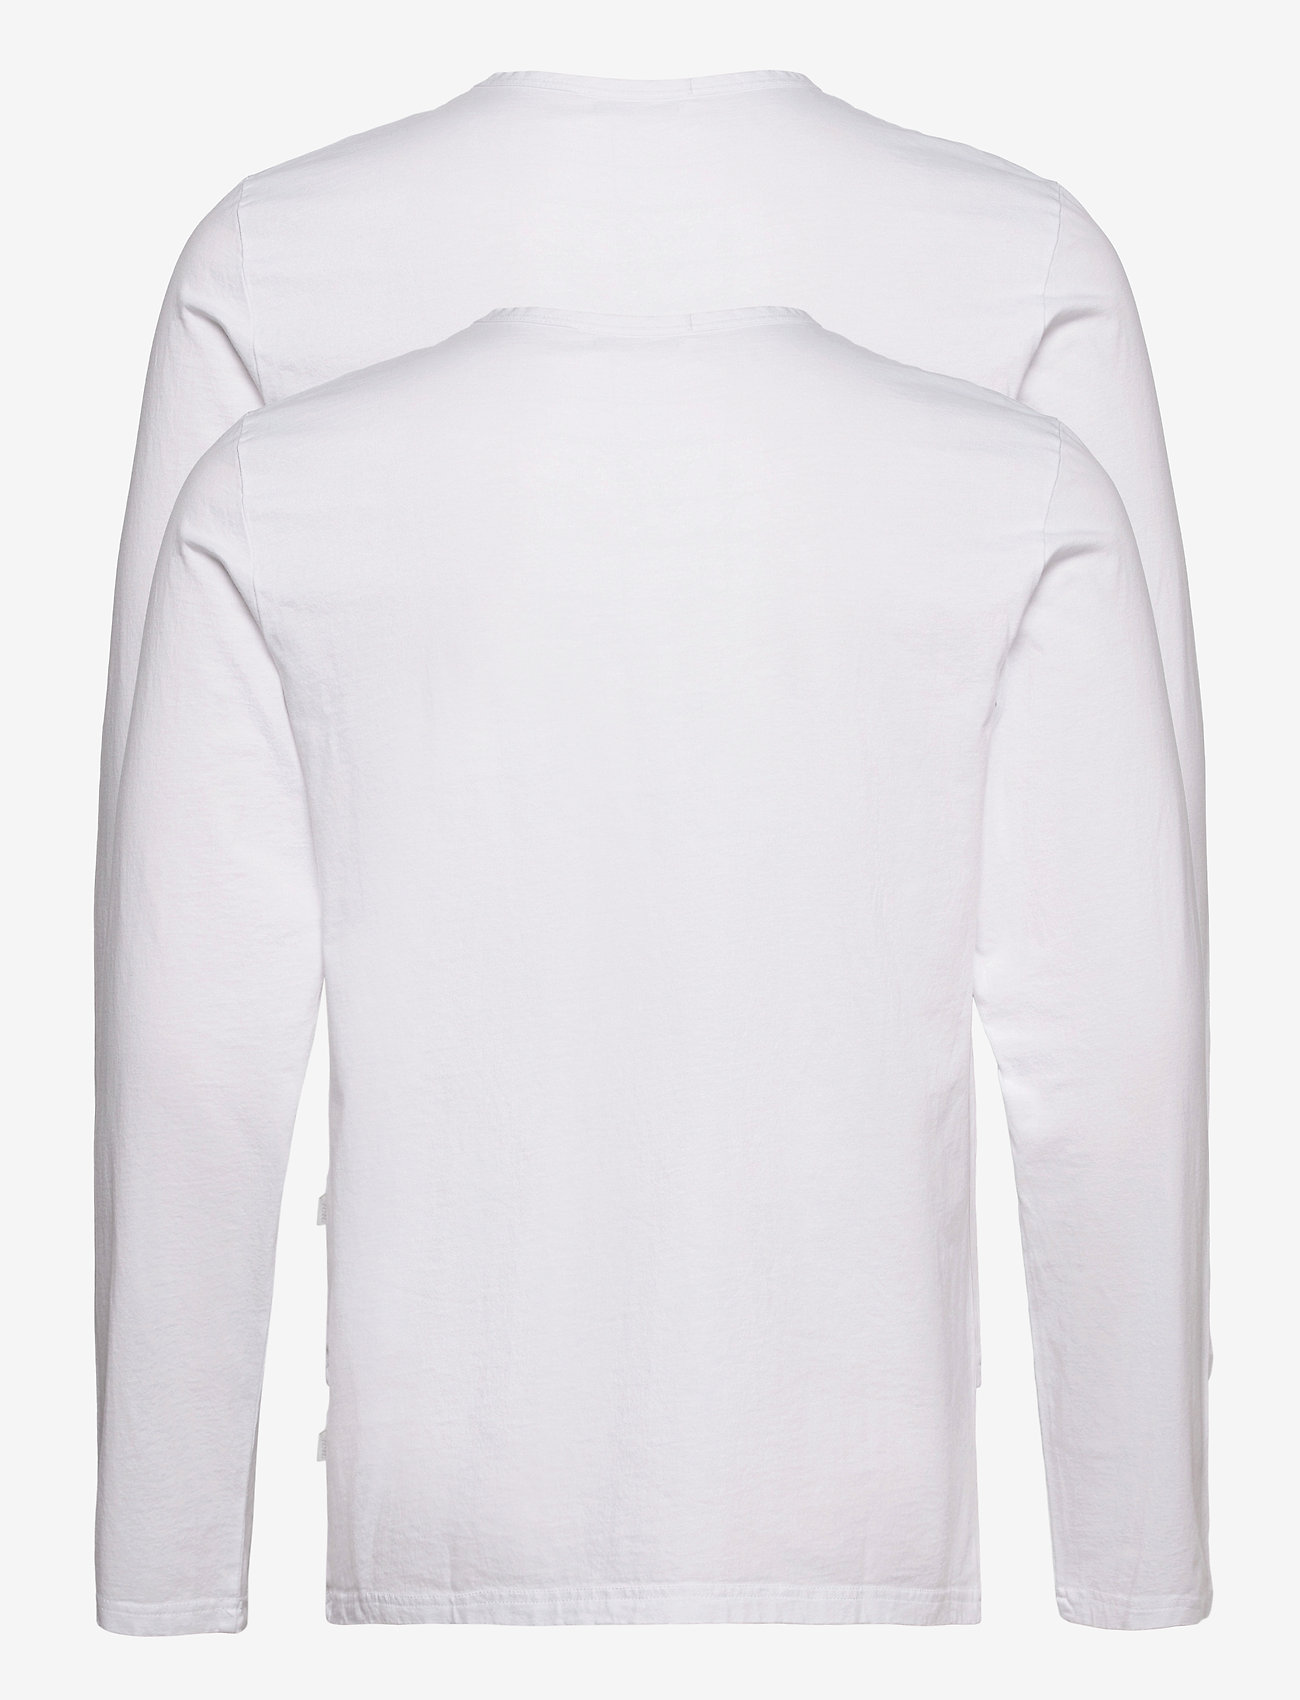 Wood Wood - Emil 2-pack long sleeve - t-shirts - bright white - 1